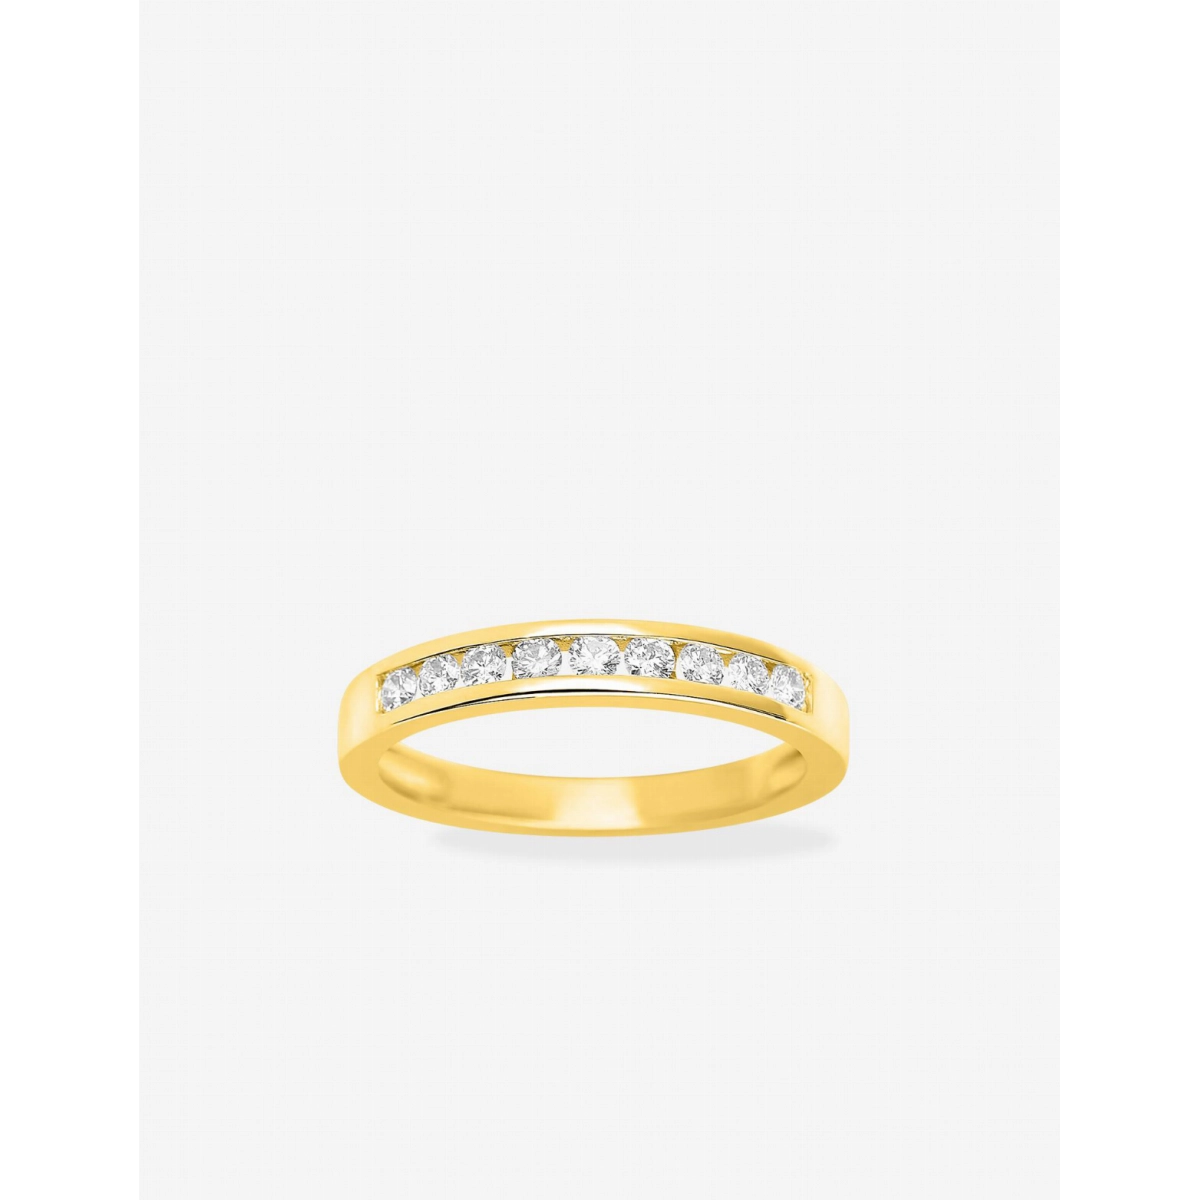 Wedding ring diam 0.30ct GHSI 18K YG Lua Blanca  2.4931.09 - Size 58